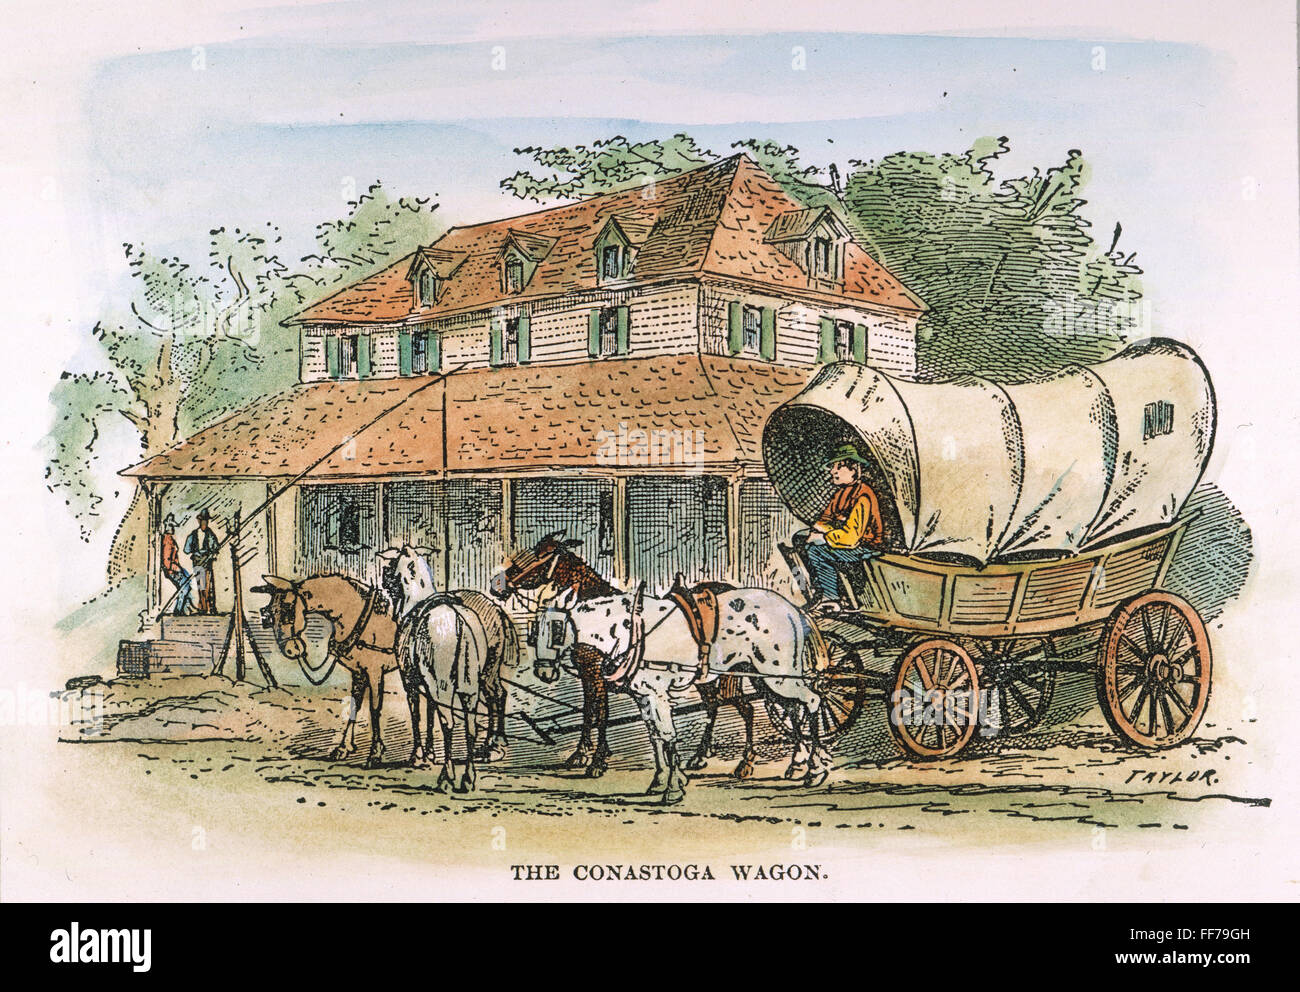 CONESTOGA WAGON, 19th C. /nDrawing, 19th century. Stock Photo